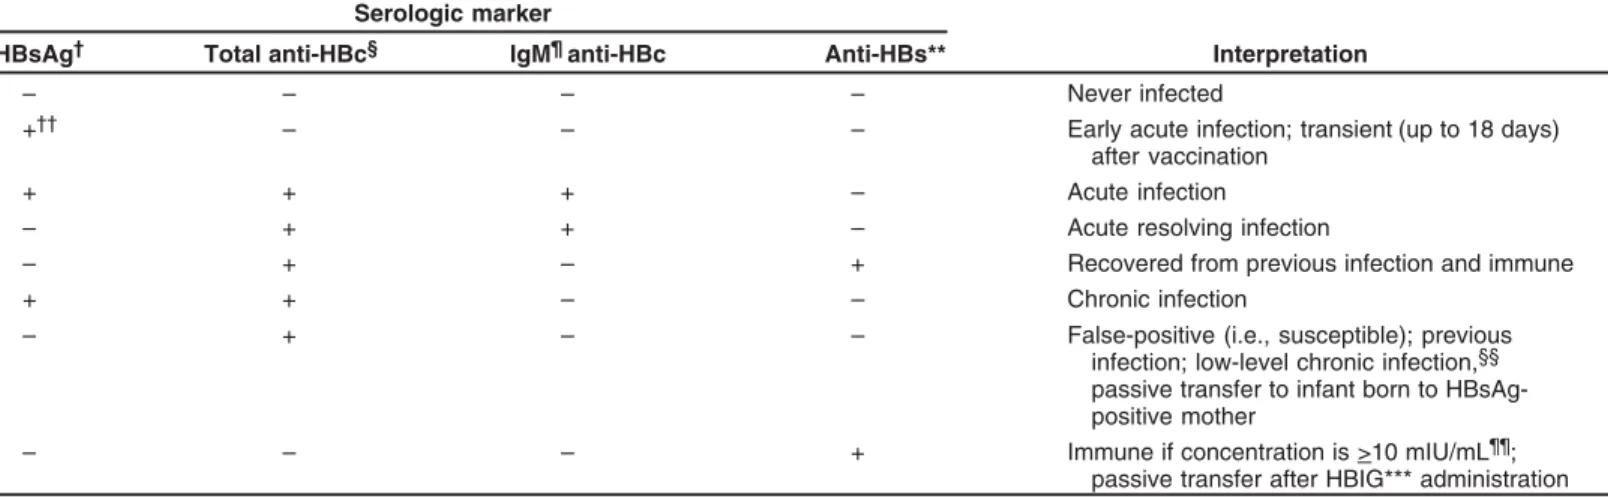 TABLE 4. Interpretation of serologic test results* for hepatitis B virus infection Serologic marker